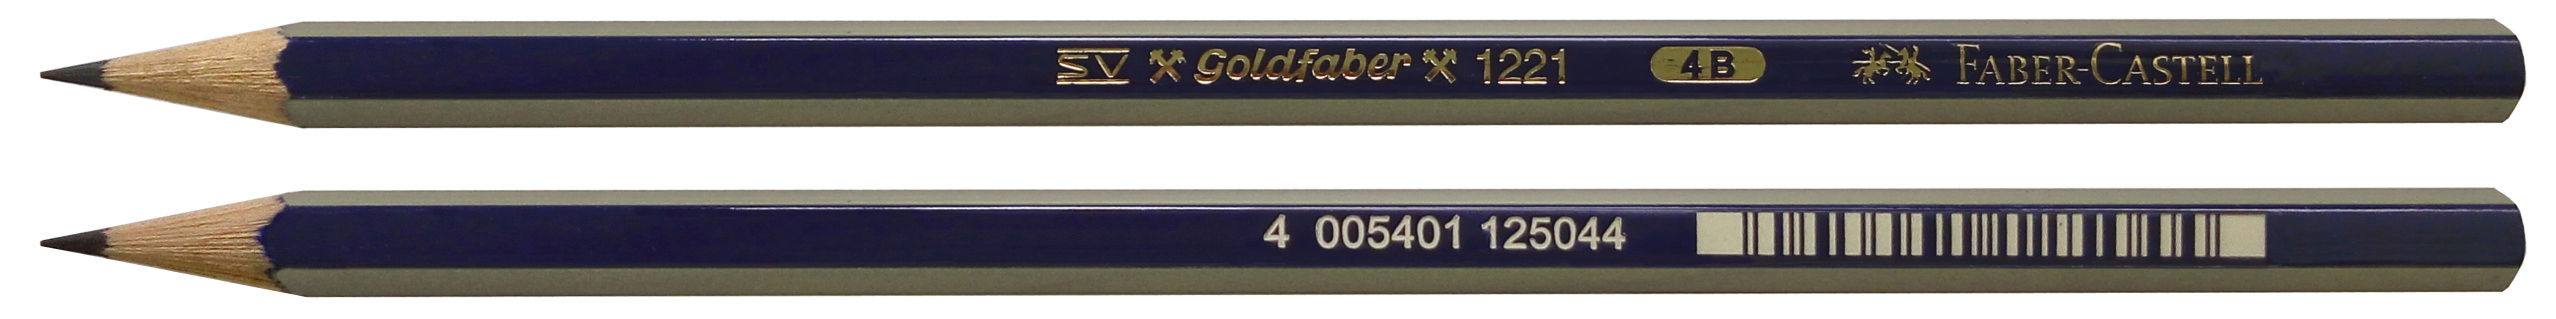 FABER-CASTELL Crayon 4B 112504 Goldfaber